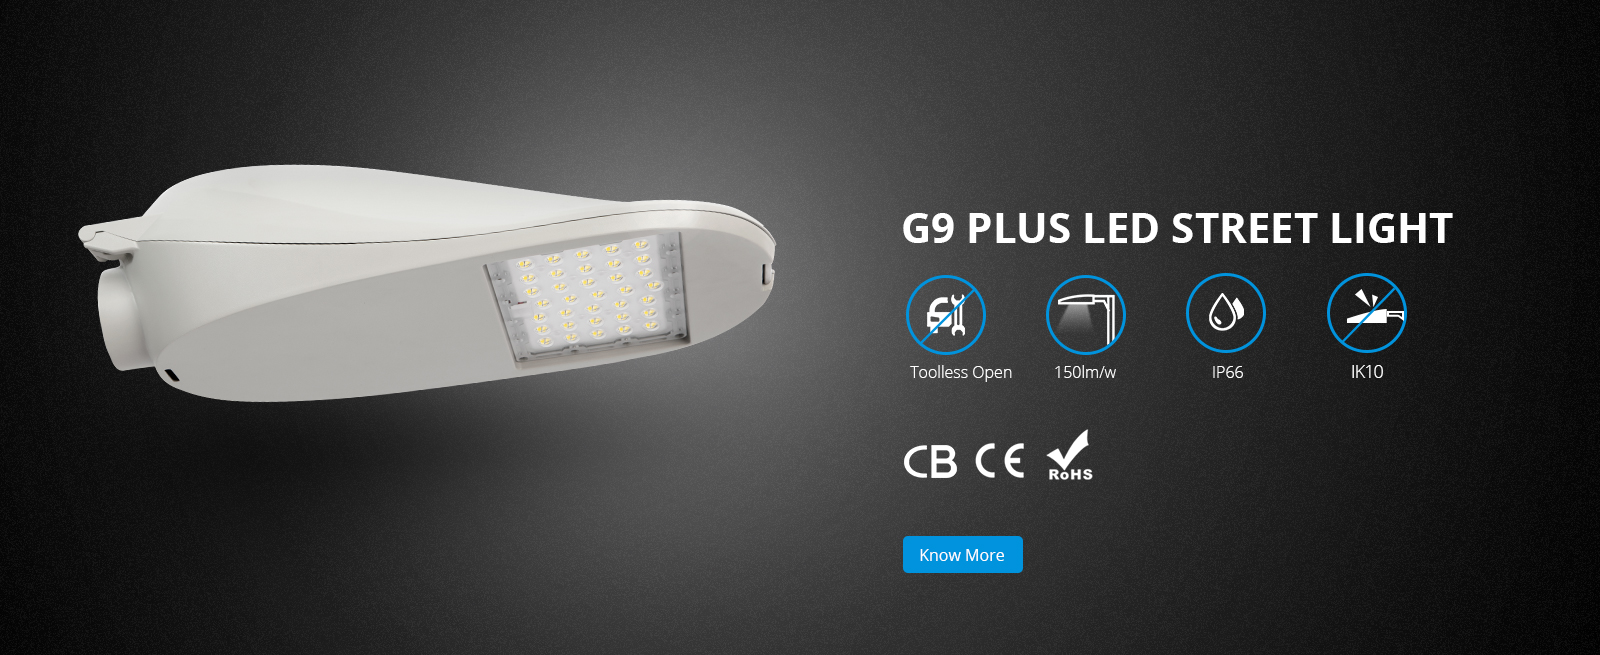 G9 PLUS LED STREET LIGHT